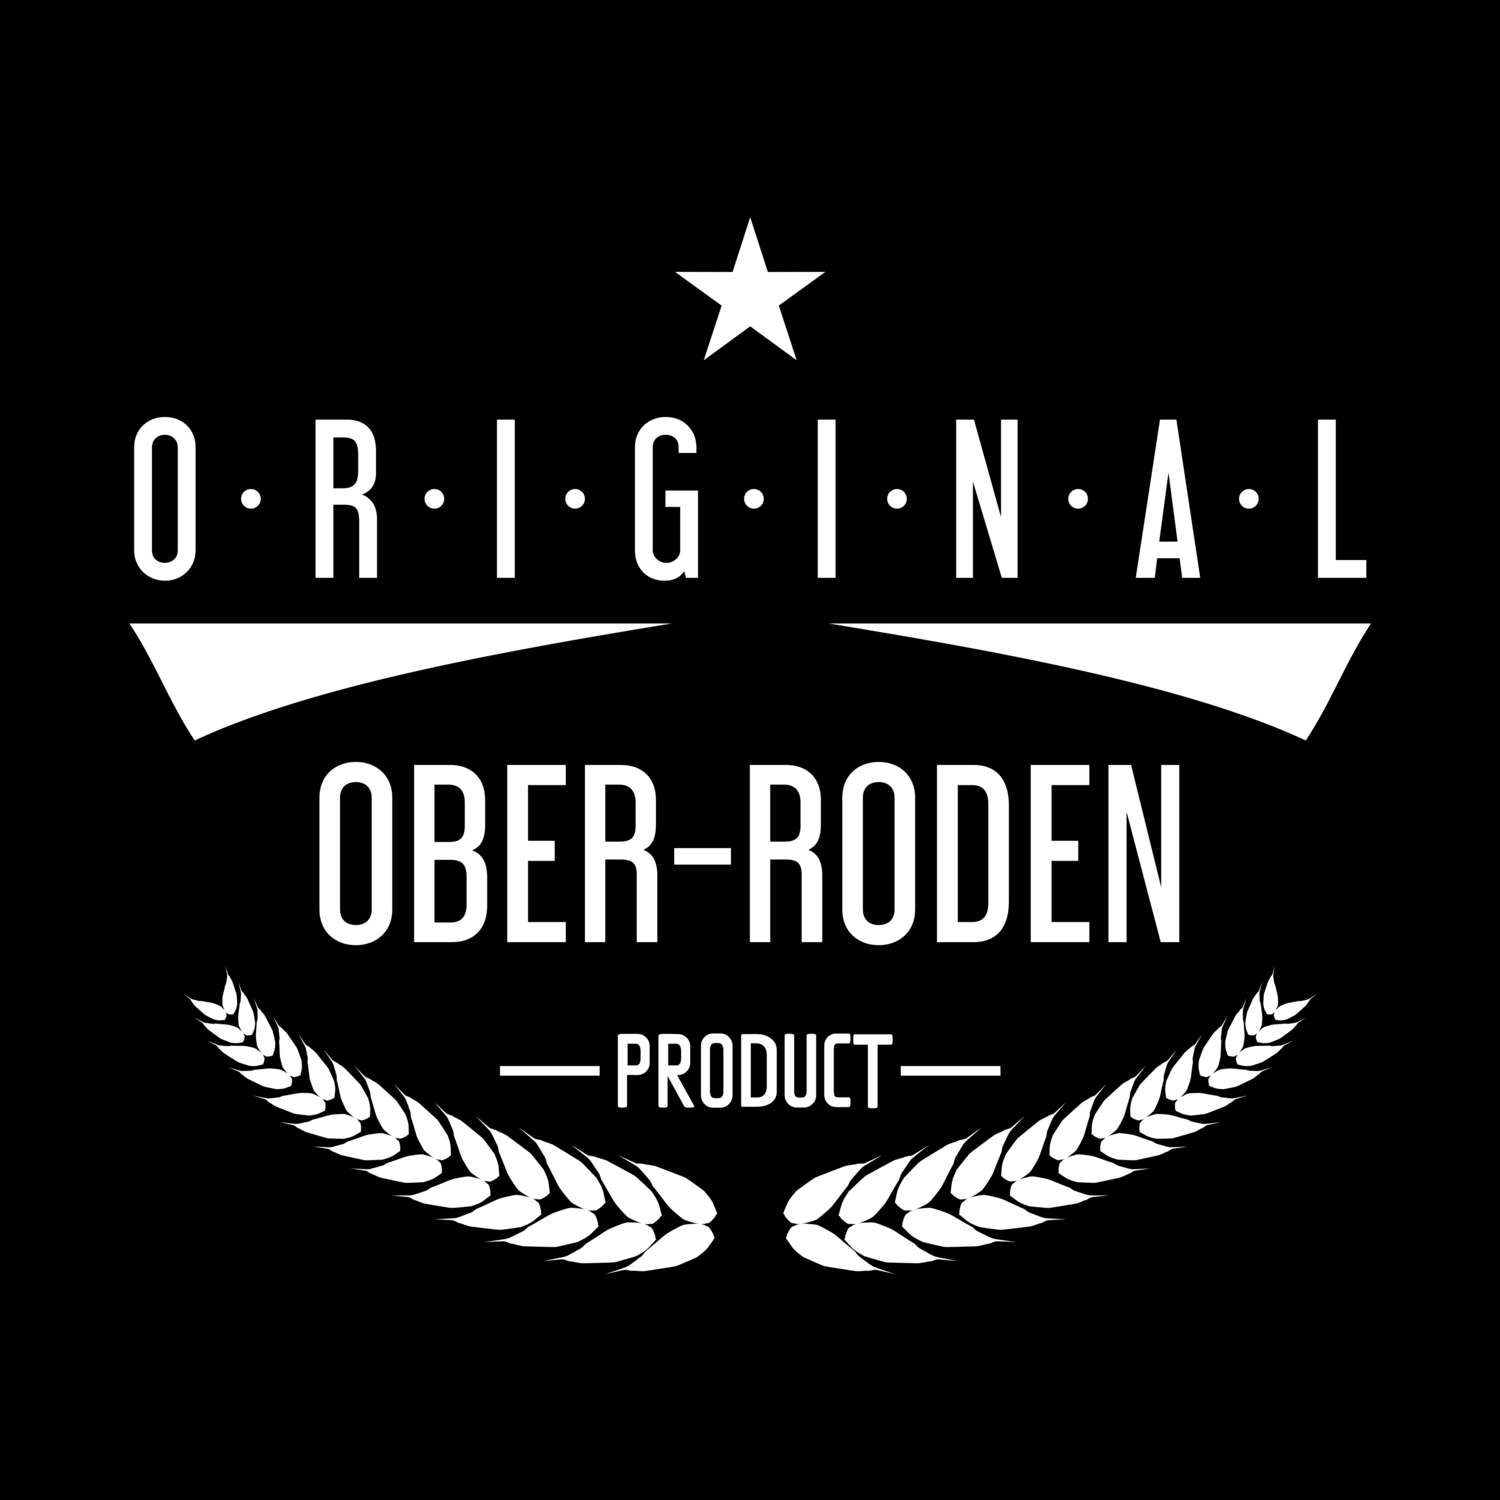 Ober-Roden T-Shirt »Original Product«